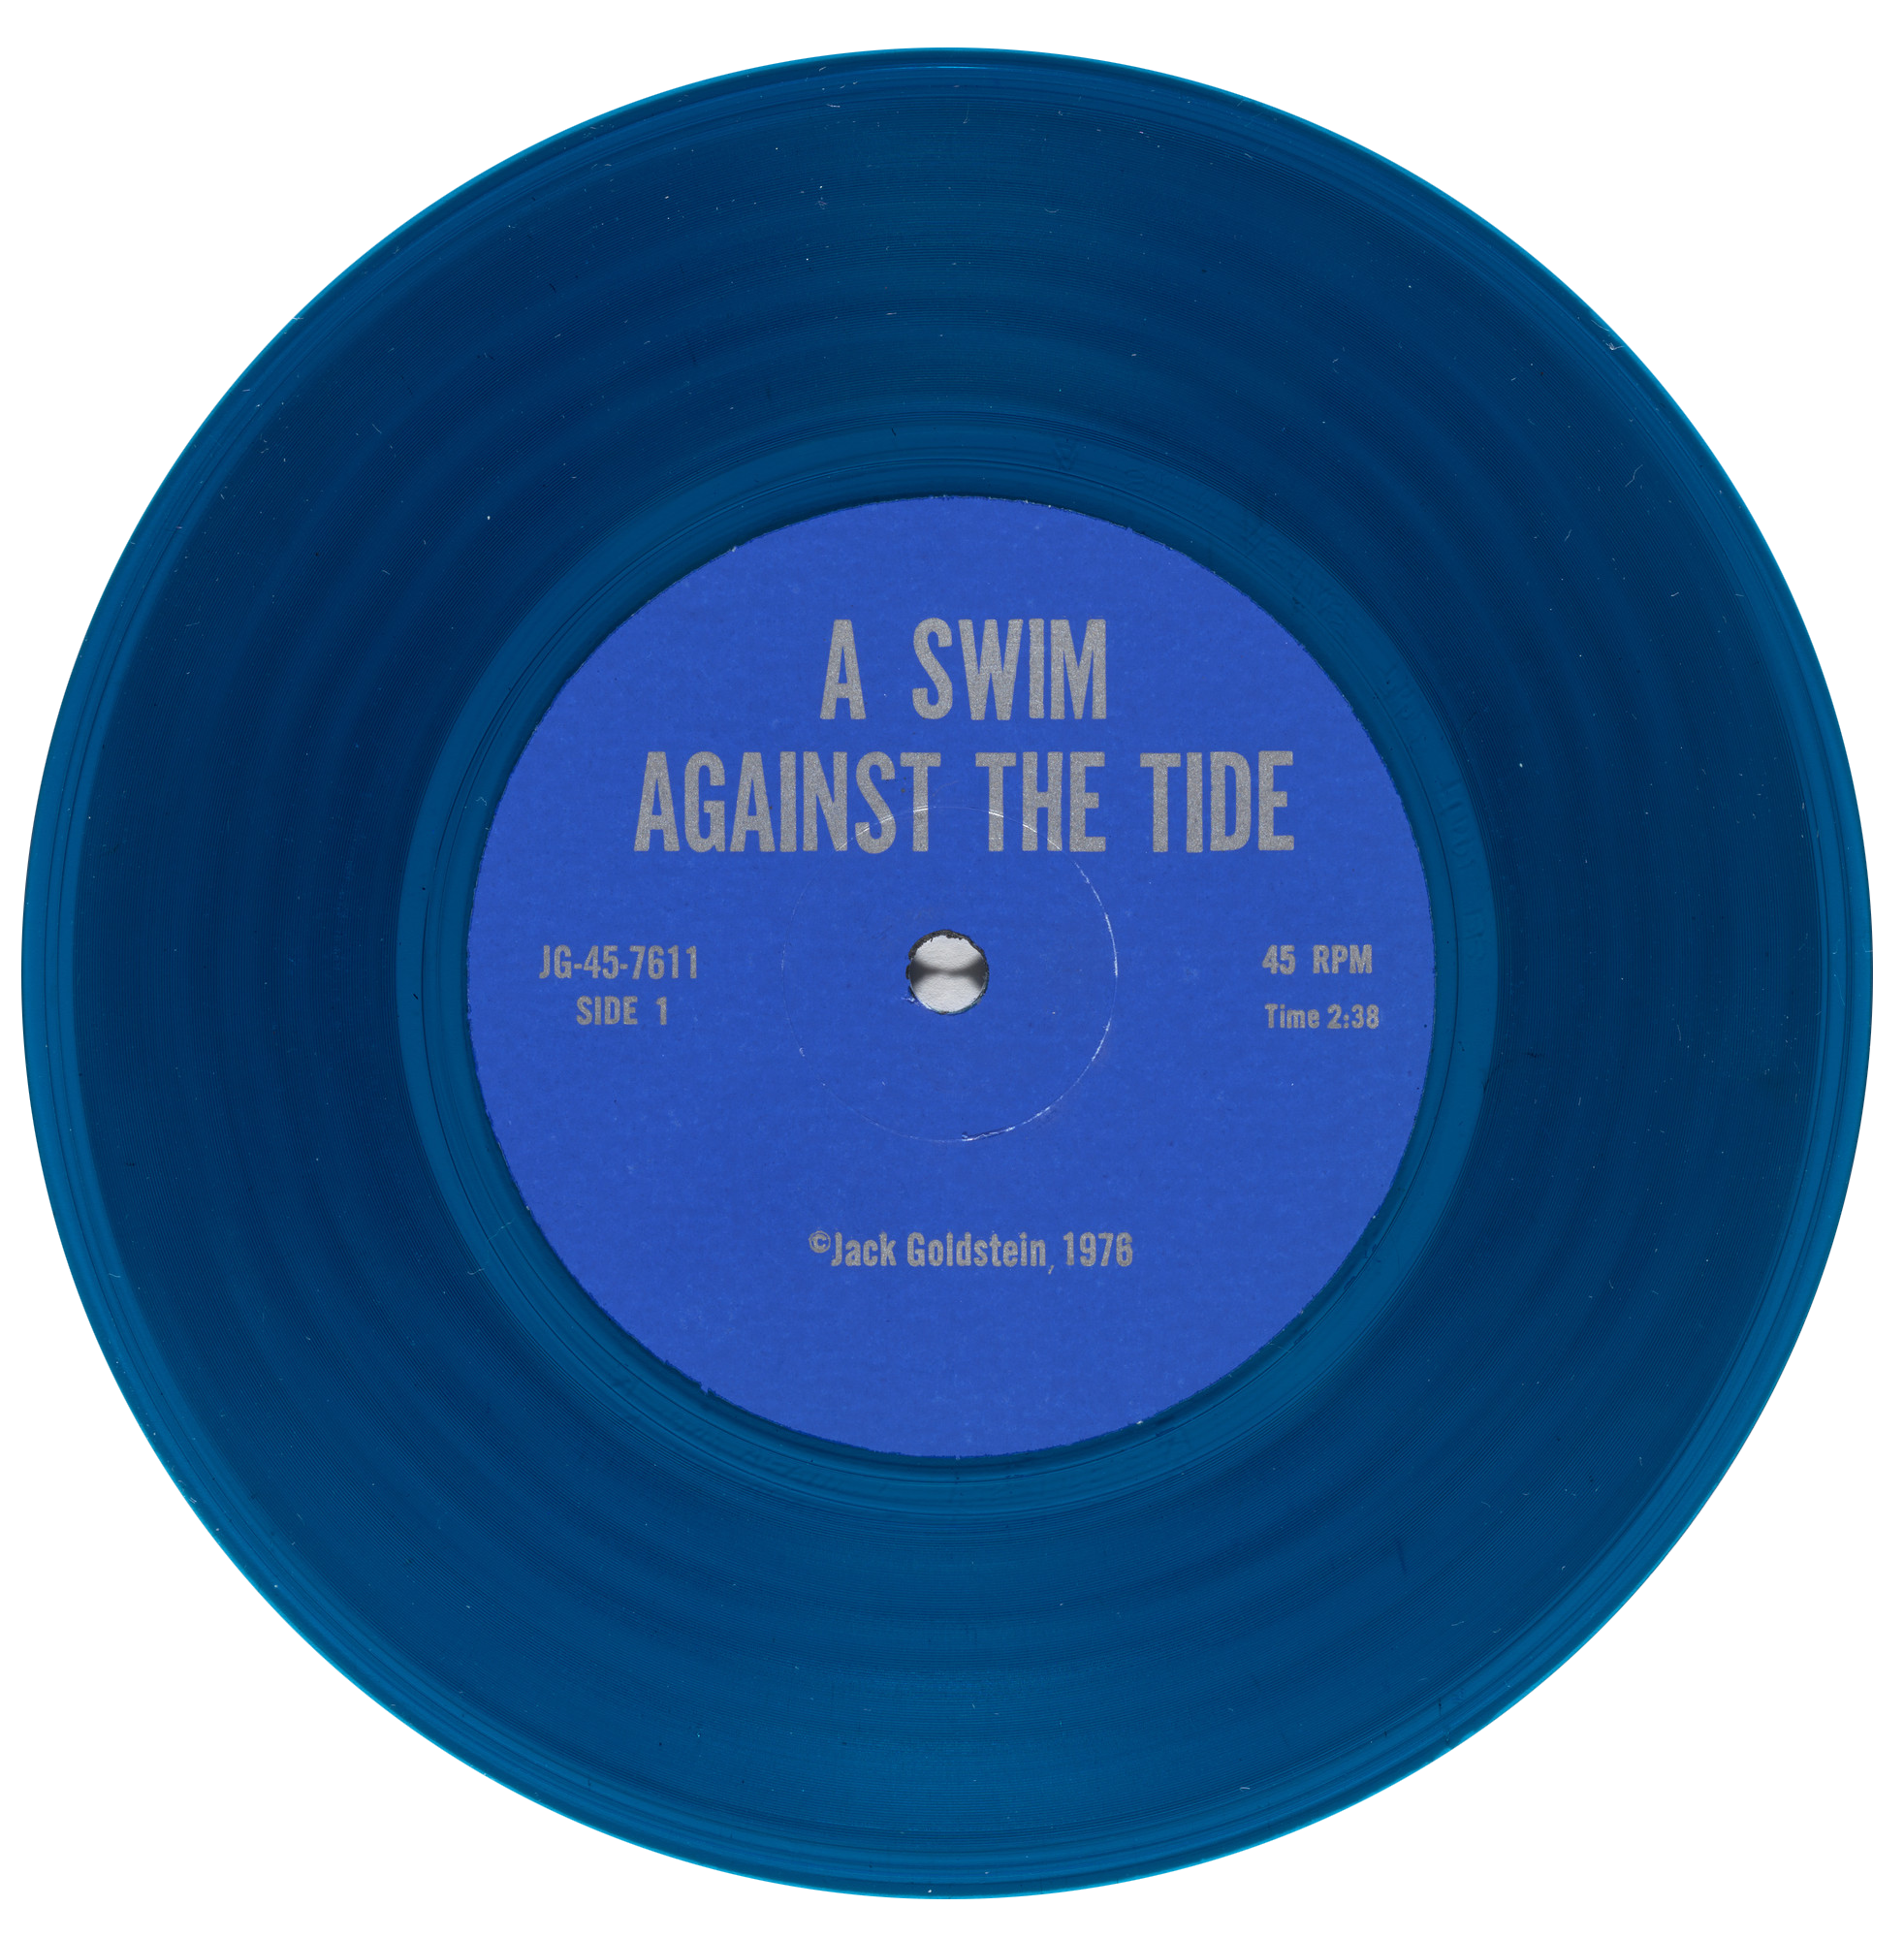  A SWIM AGAINST THE TIDE
Blue vinyl - 45 rpm 7-inch record

A Swim Against The Tide est un des neuf éléments constitutifs de :
A Suite of Nine 45 rpm 7-Inch Records with Sound Effects
1976